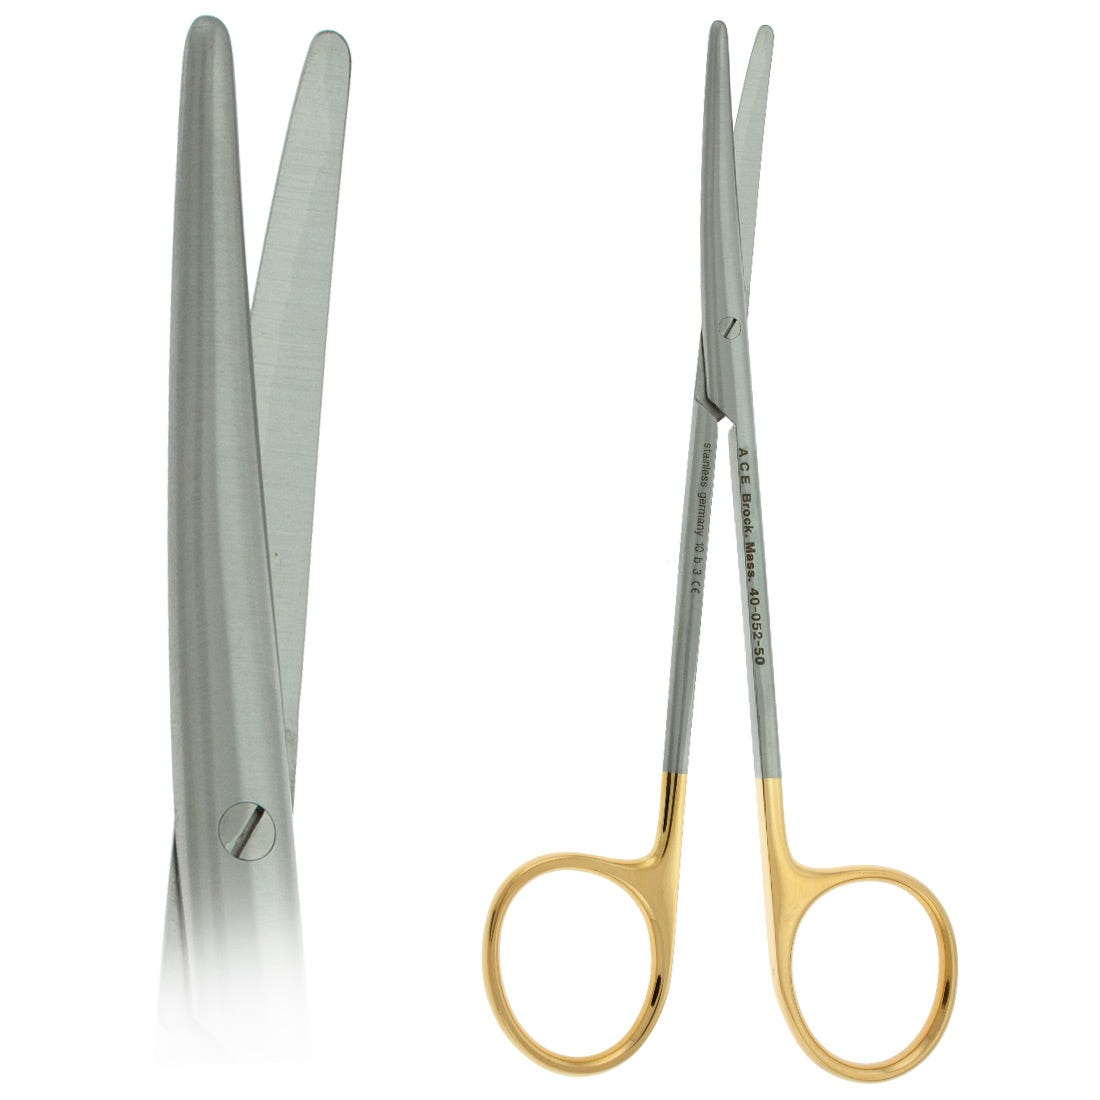 ACE Metzenbaum Scissors, curved, blunt, tungsten carbide tips